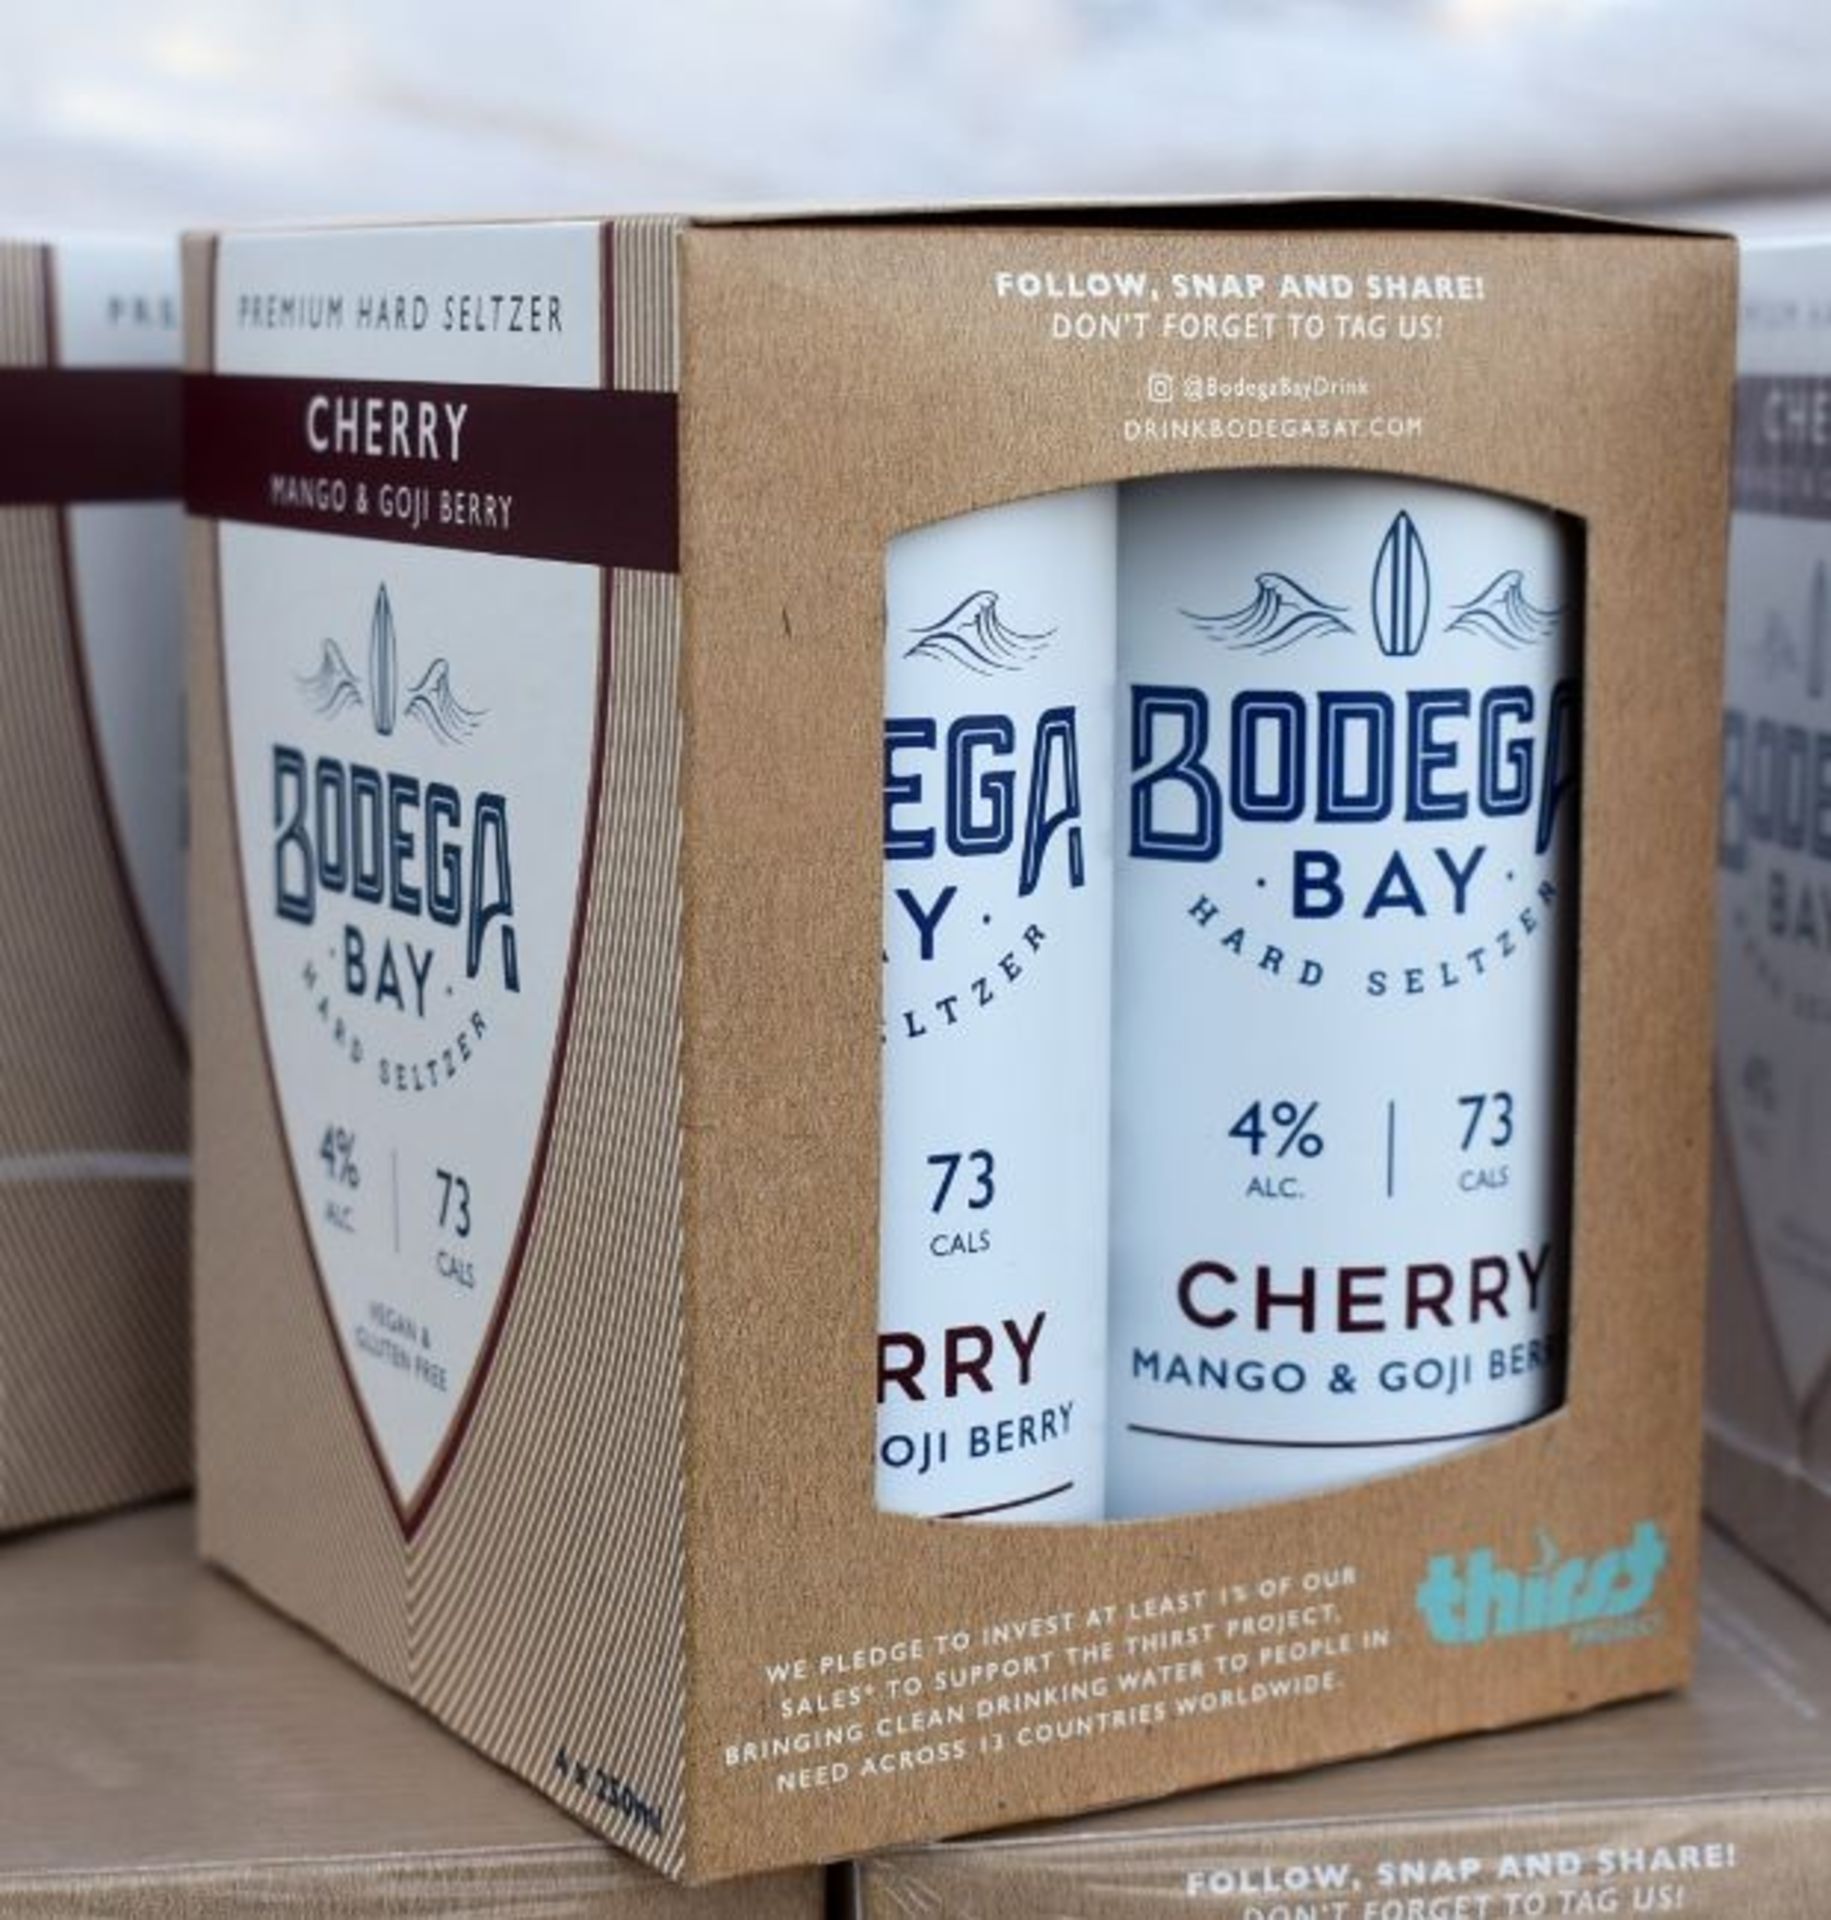 24 x Bodega Bay Hard Seltzer 250ml Alcoholic Sparkling Water Drinks - Cherry Mango & Goji Berry - Image 6 of 7